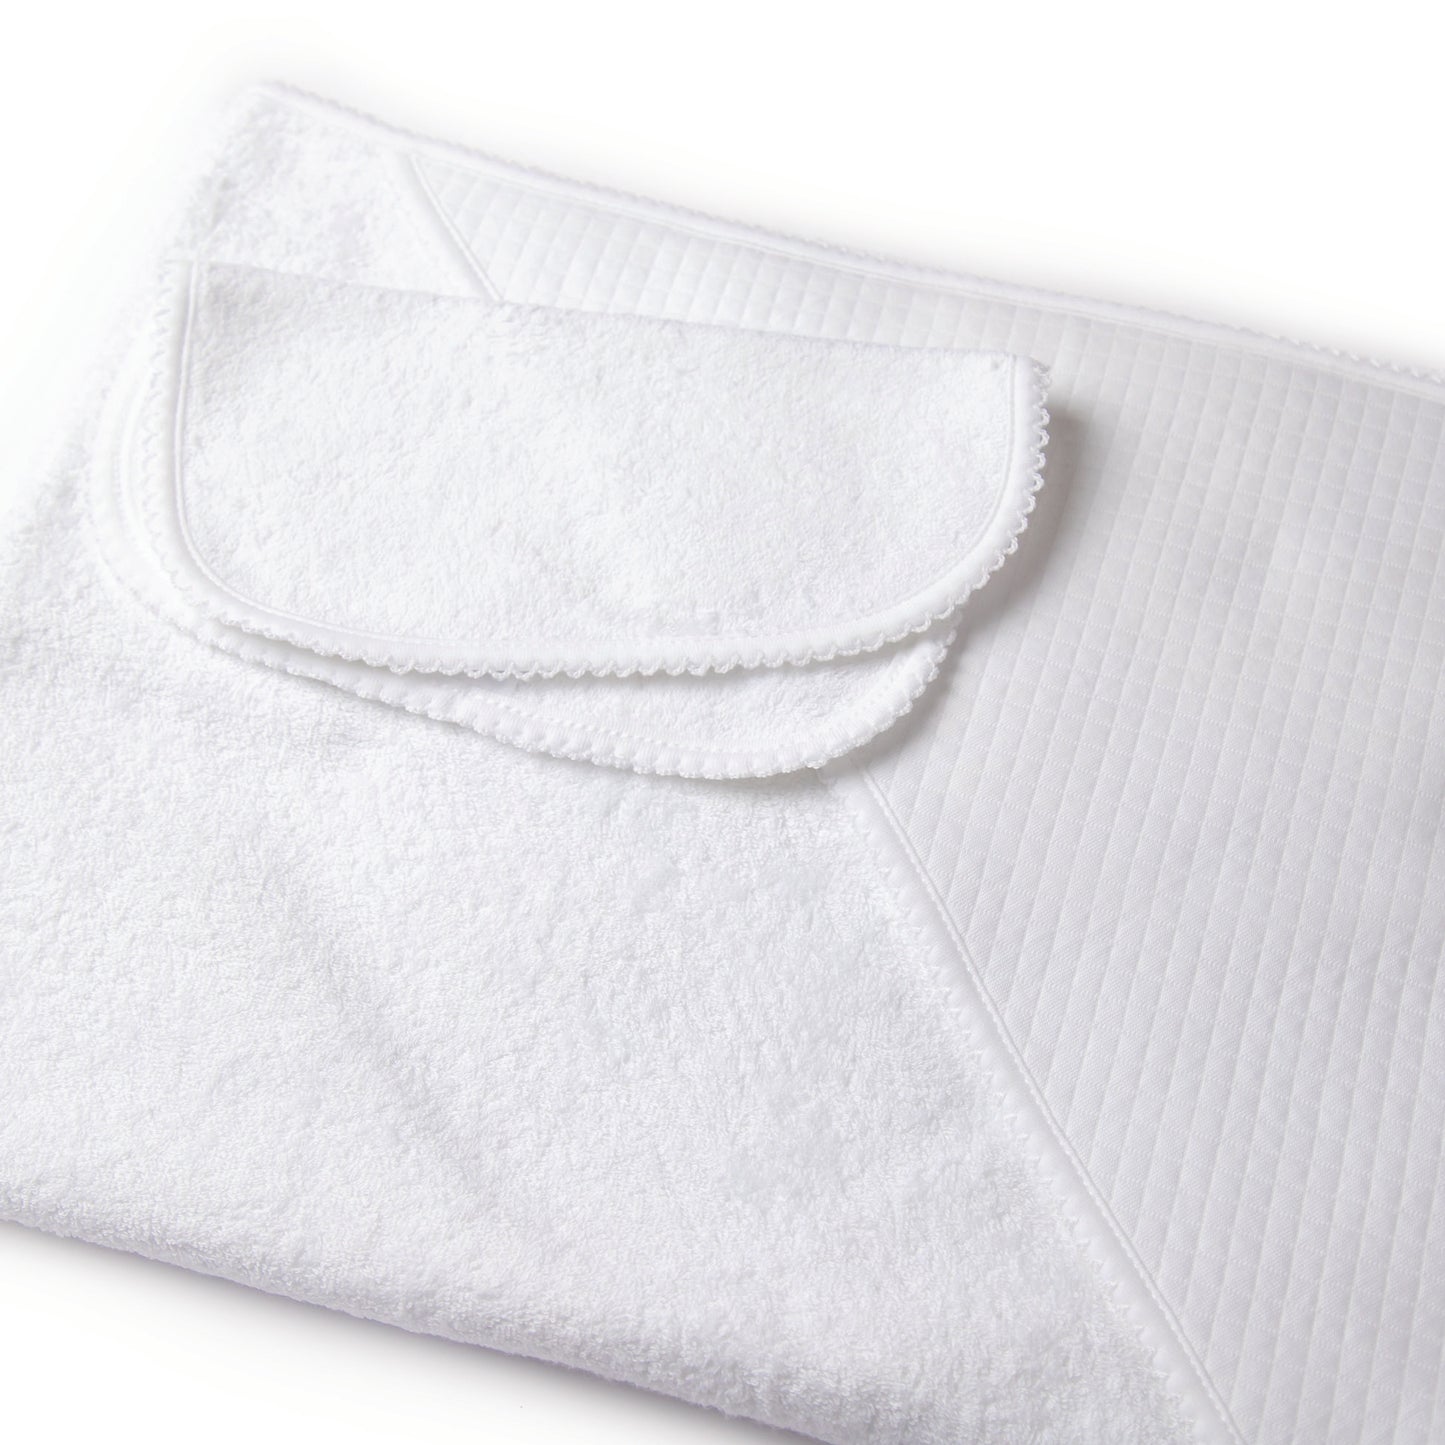 White Hooded Towel